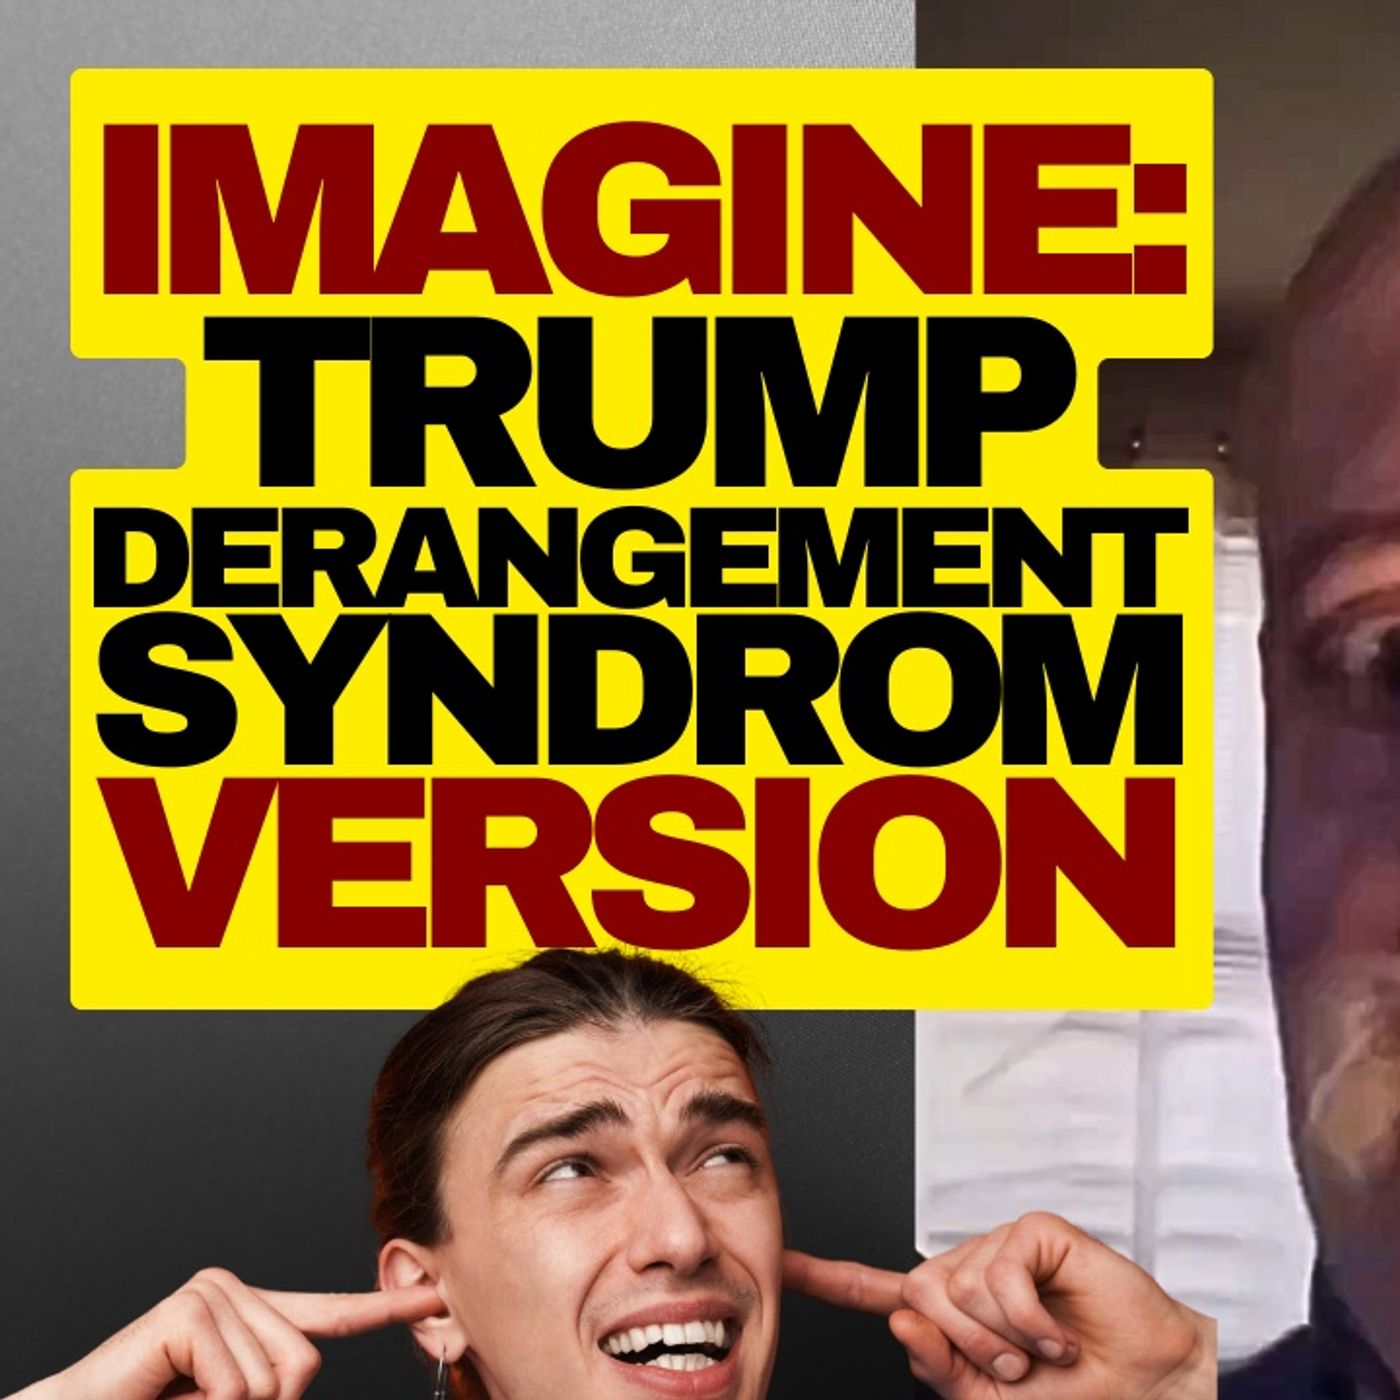 Trump Derangement Syndrome Version Of Imagine